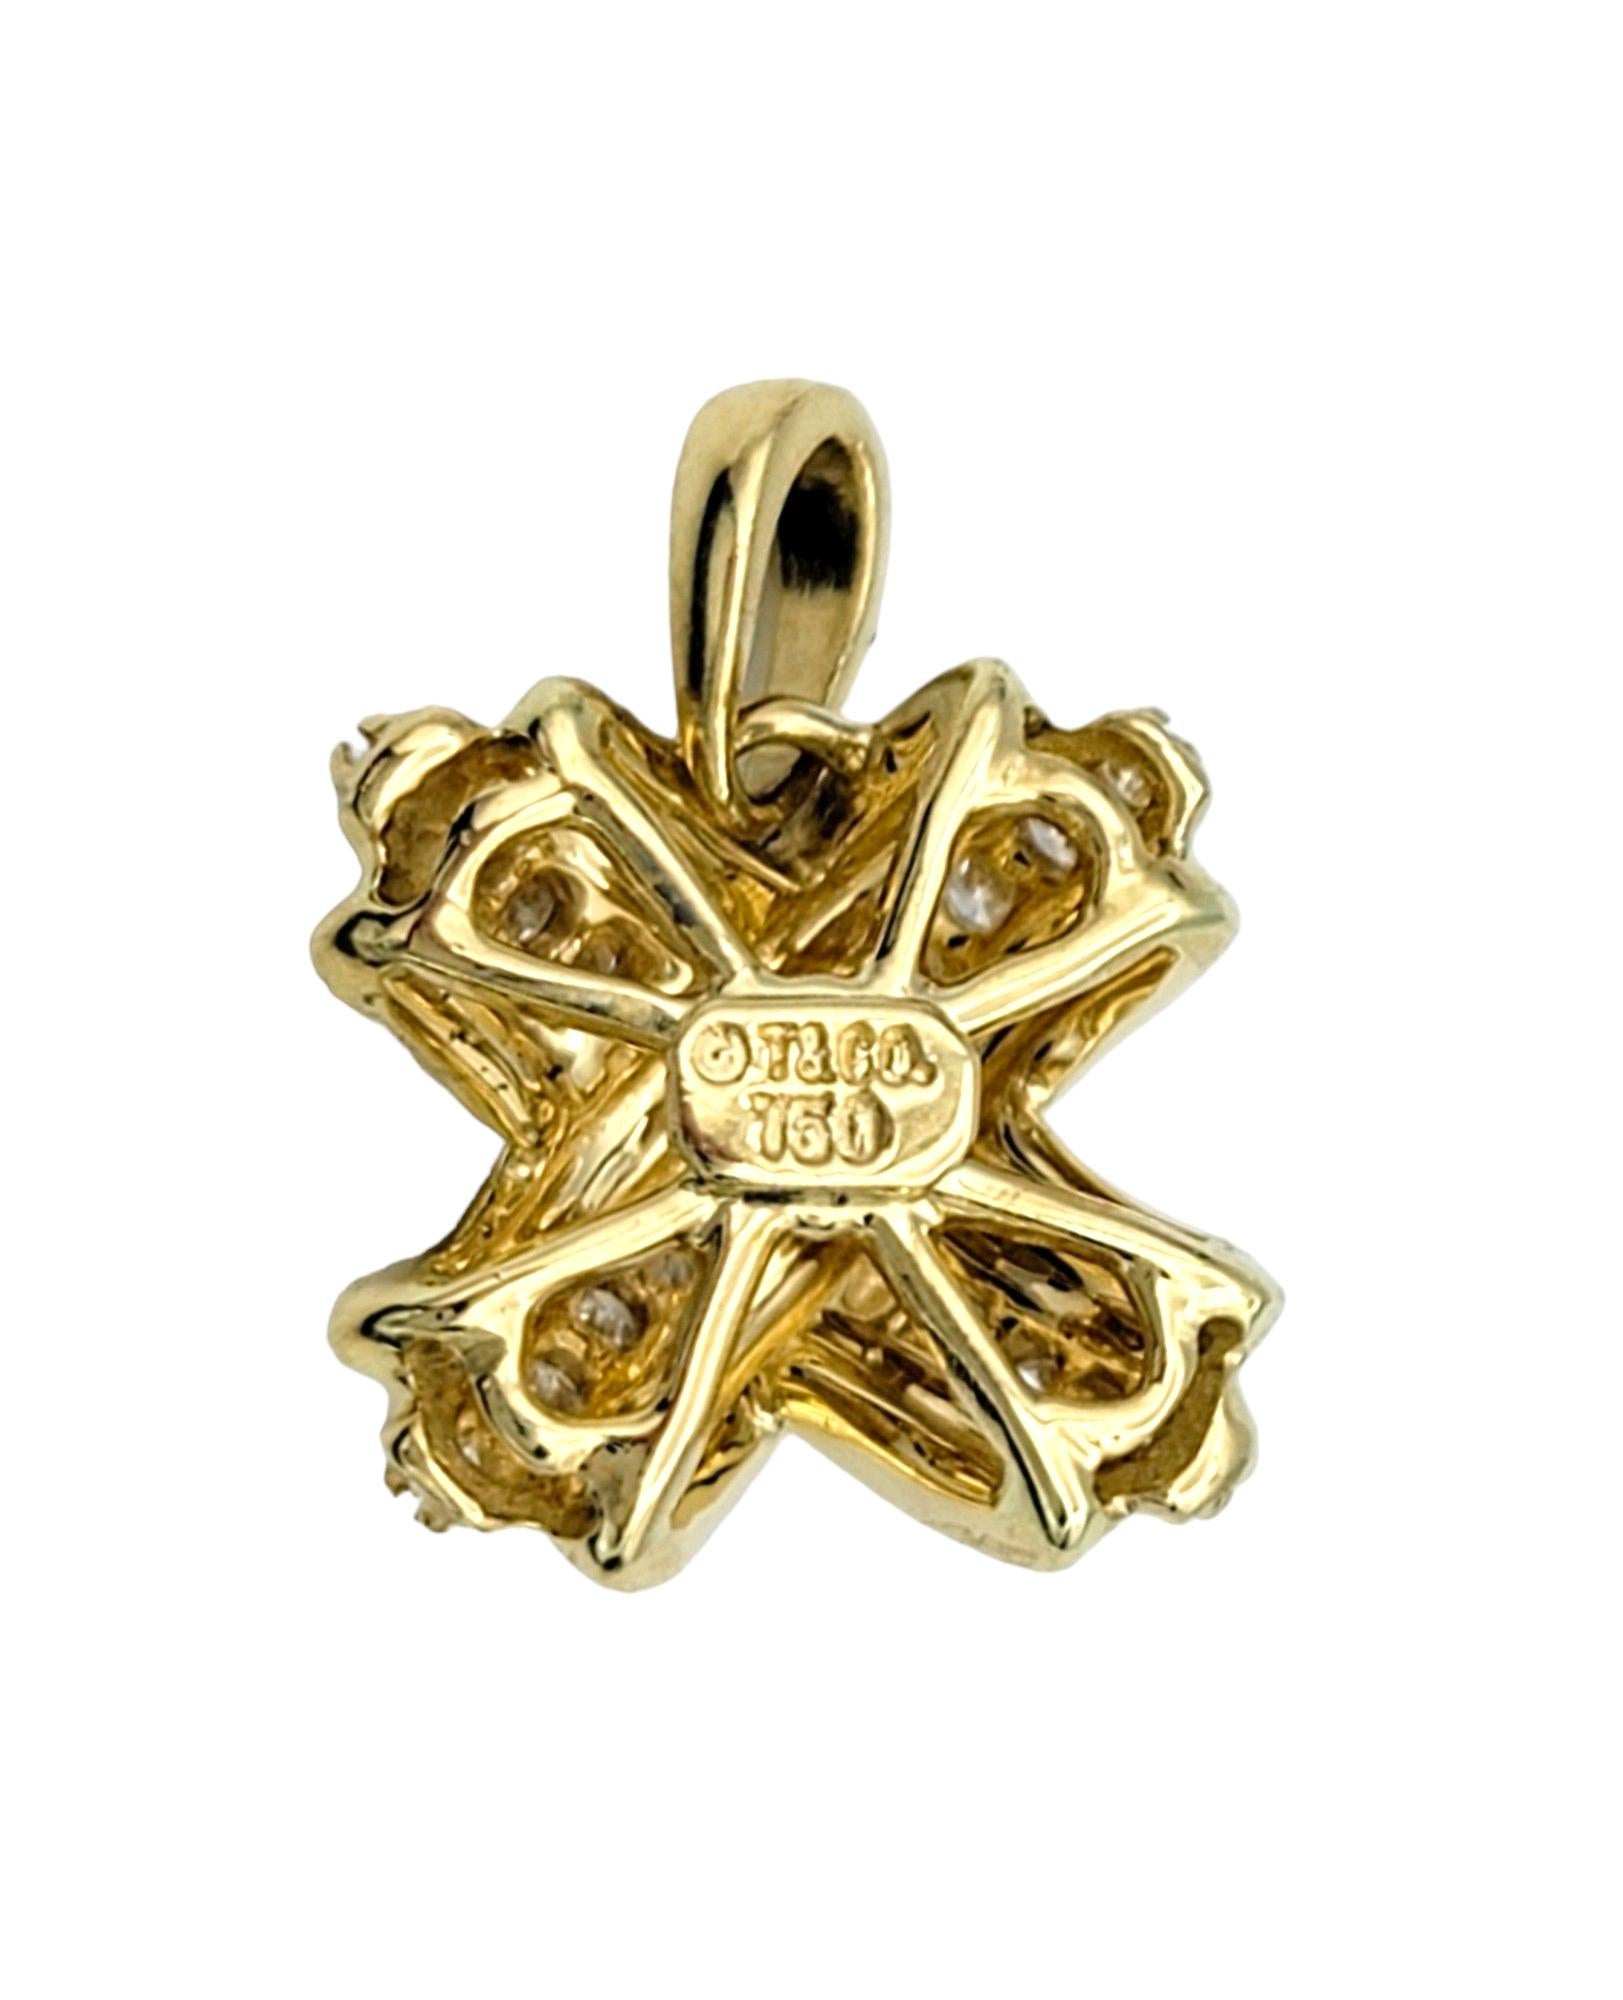 Tiffany & Co. Signature X Design Diamond Pendant Set in 18 Karat Yellow Gold For Sale 1